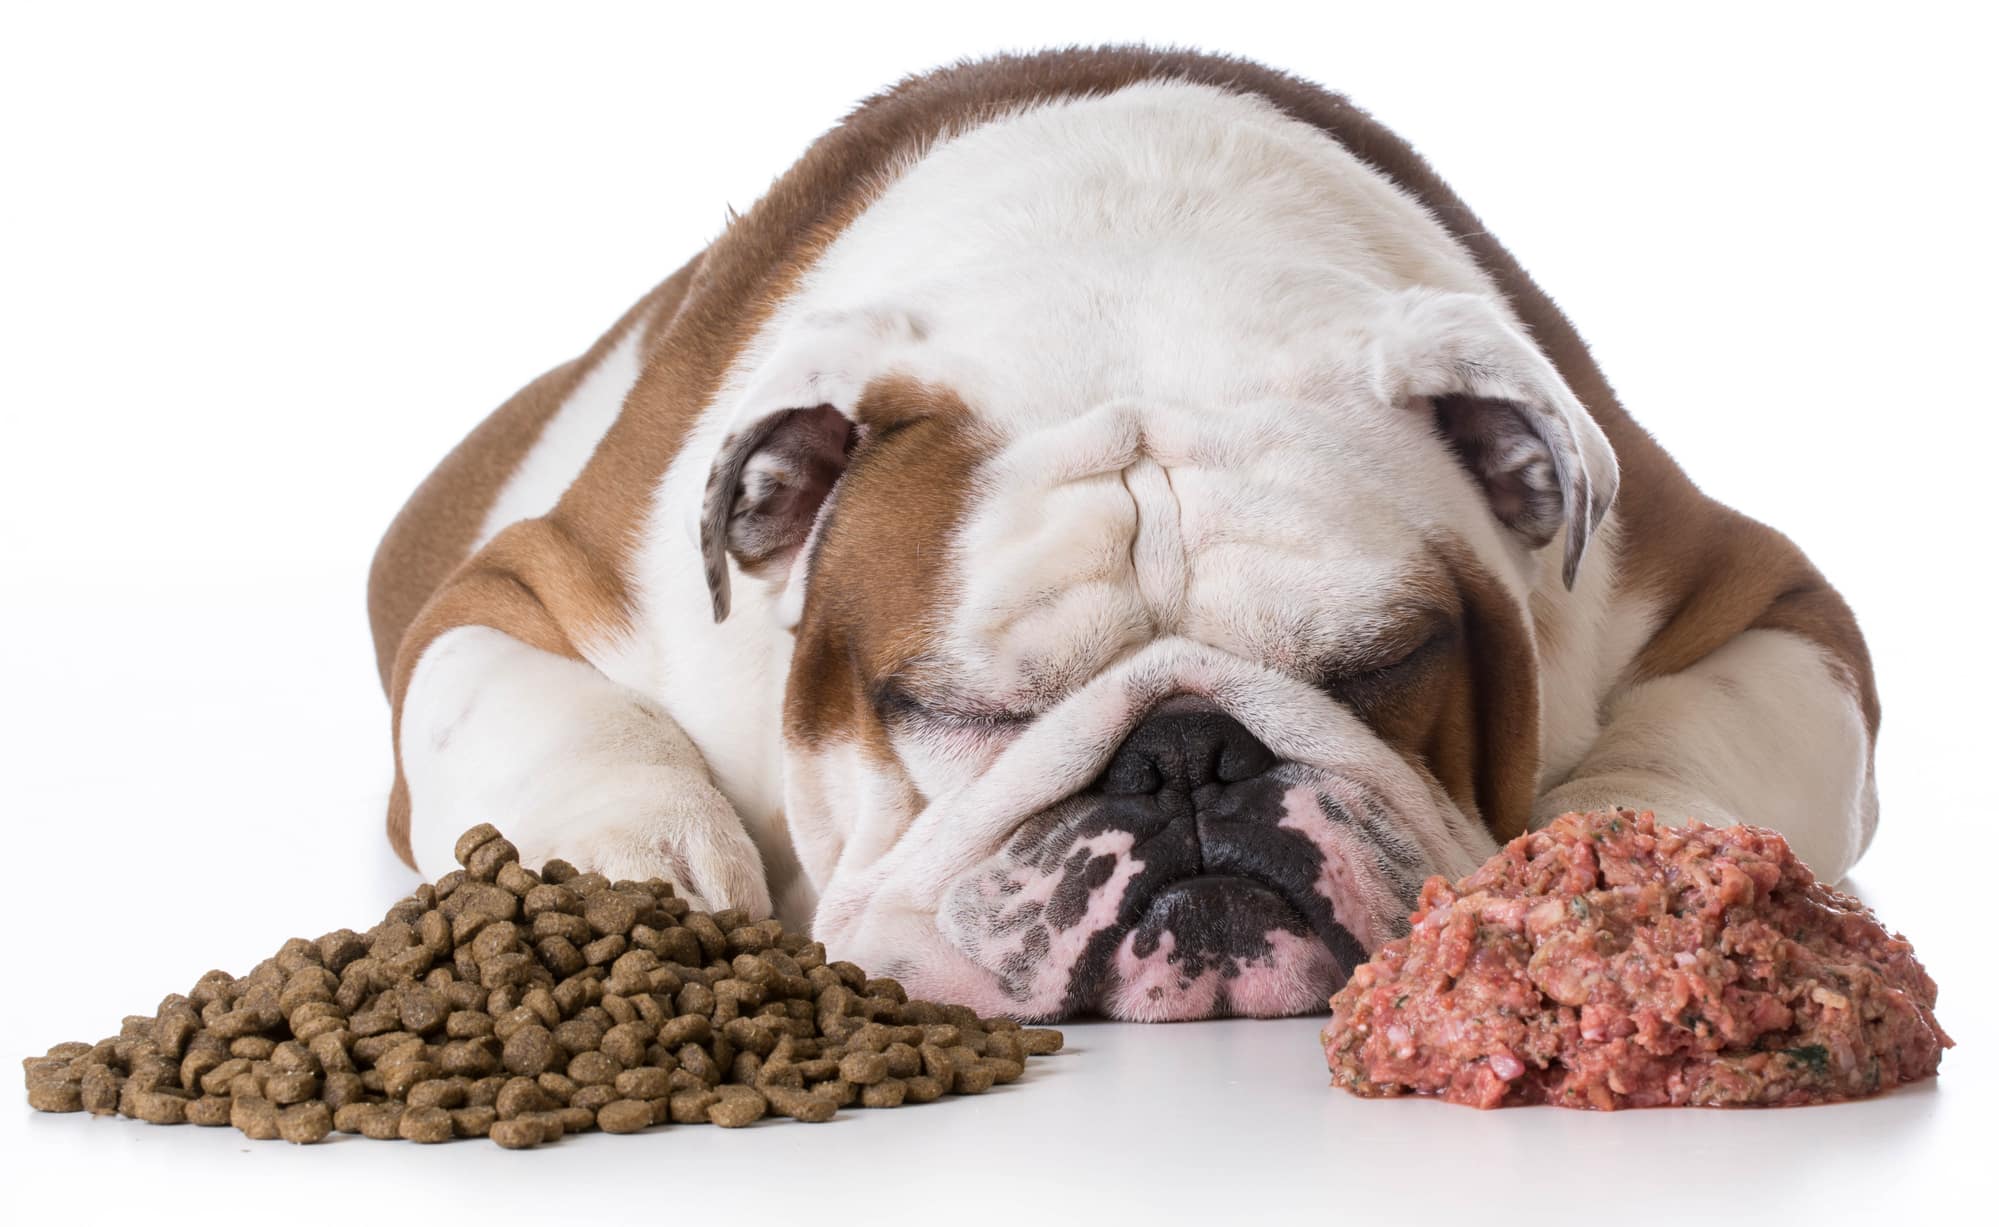 Raw dog food vs kibble